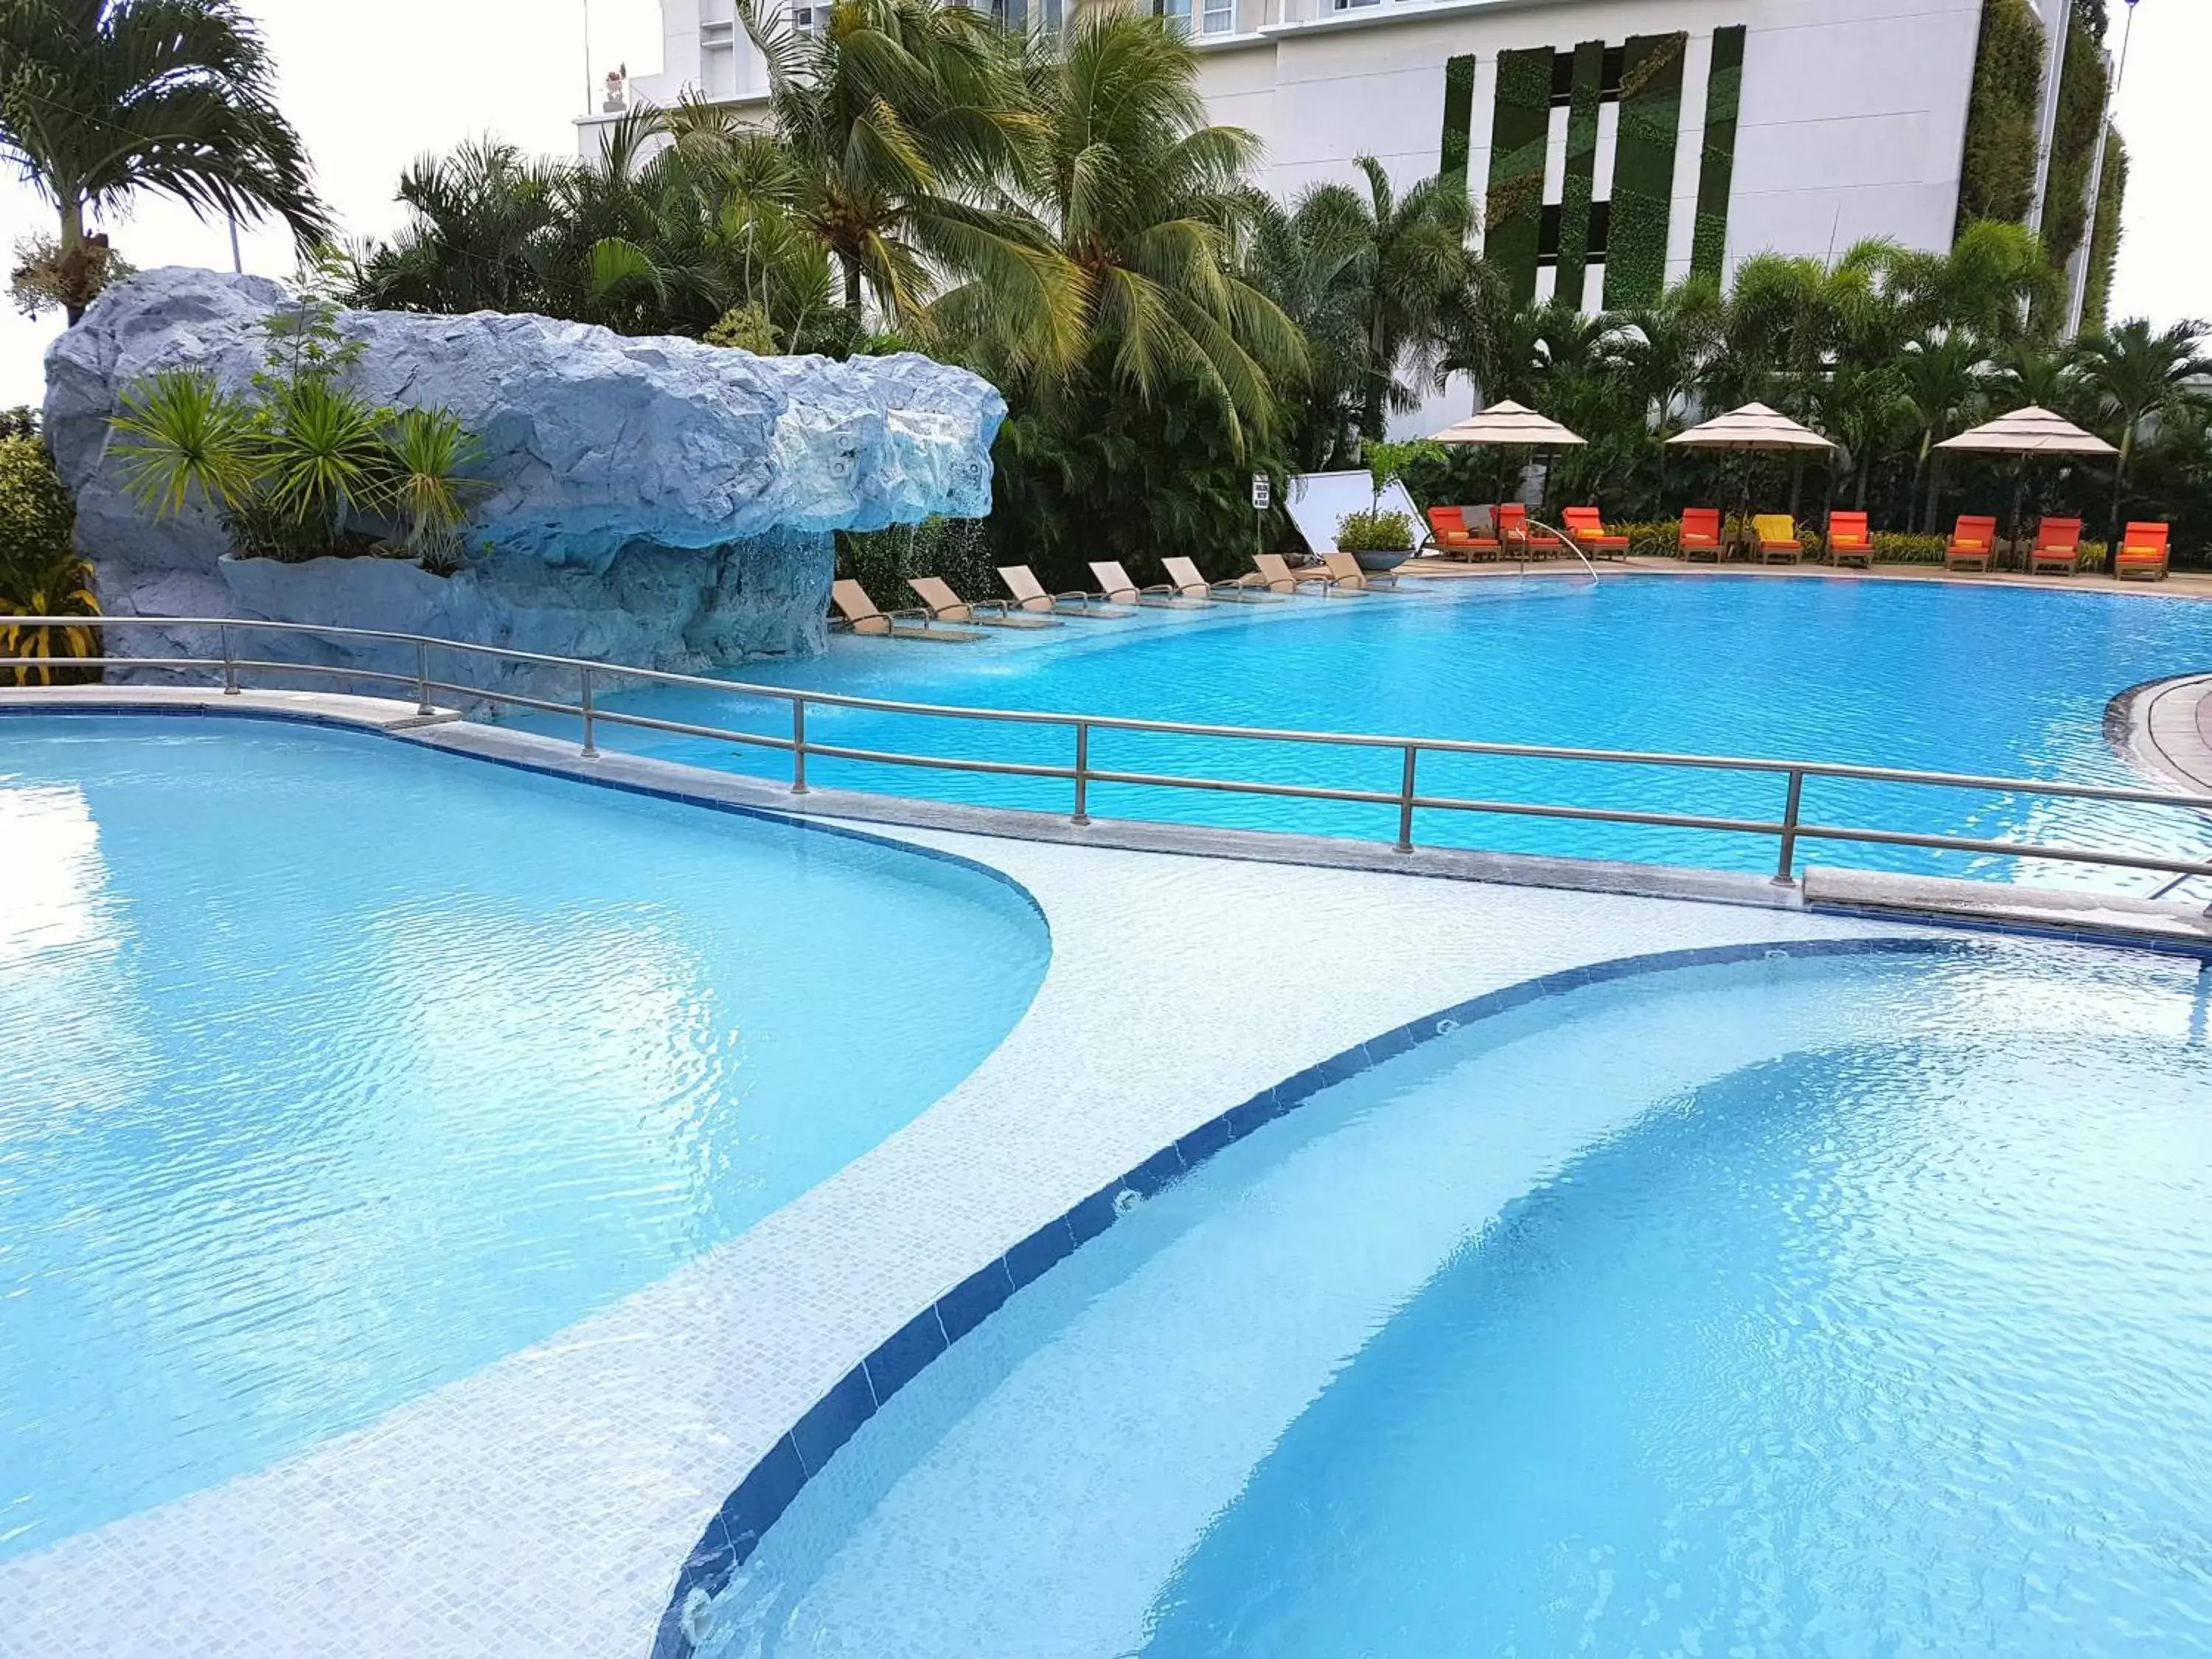 On site, Swimming Pool in Marco Polo Plaza Cebu